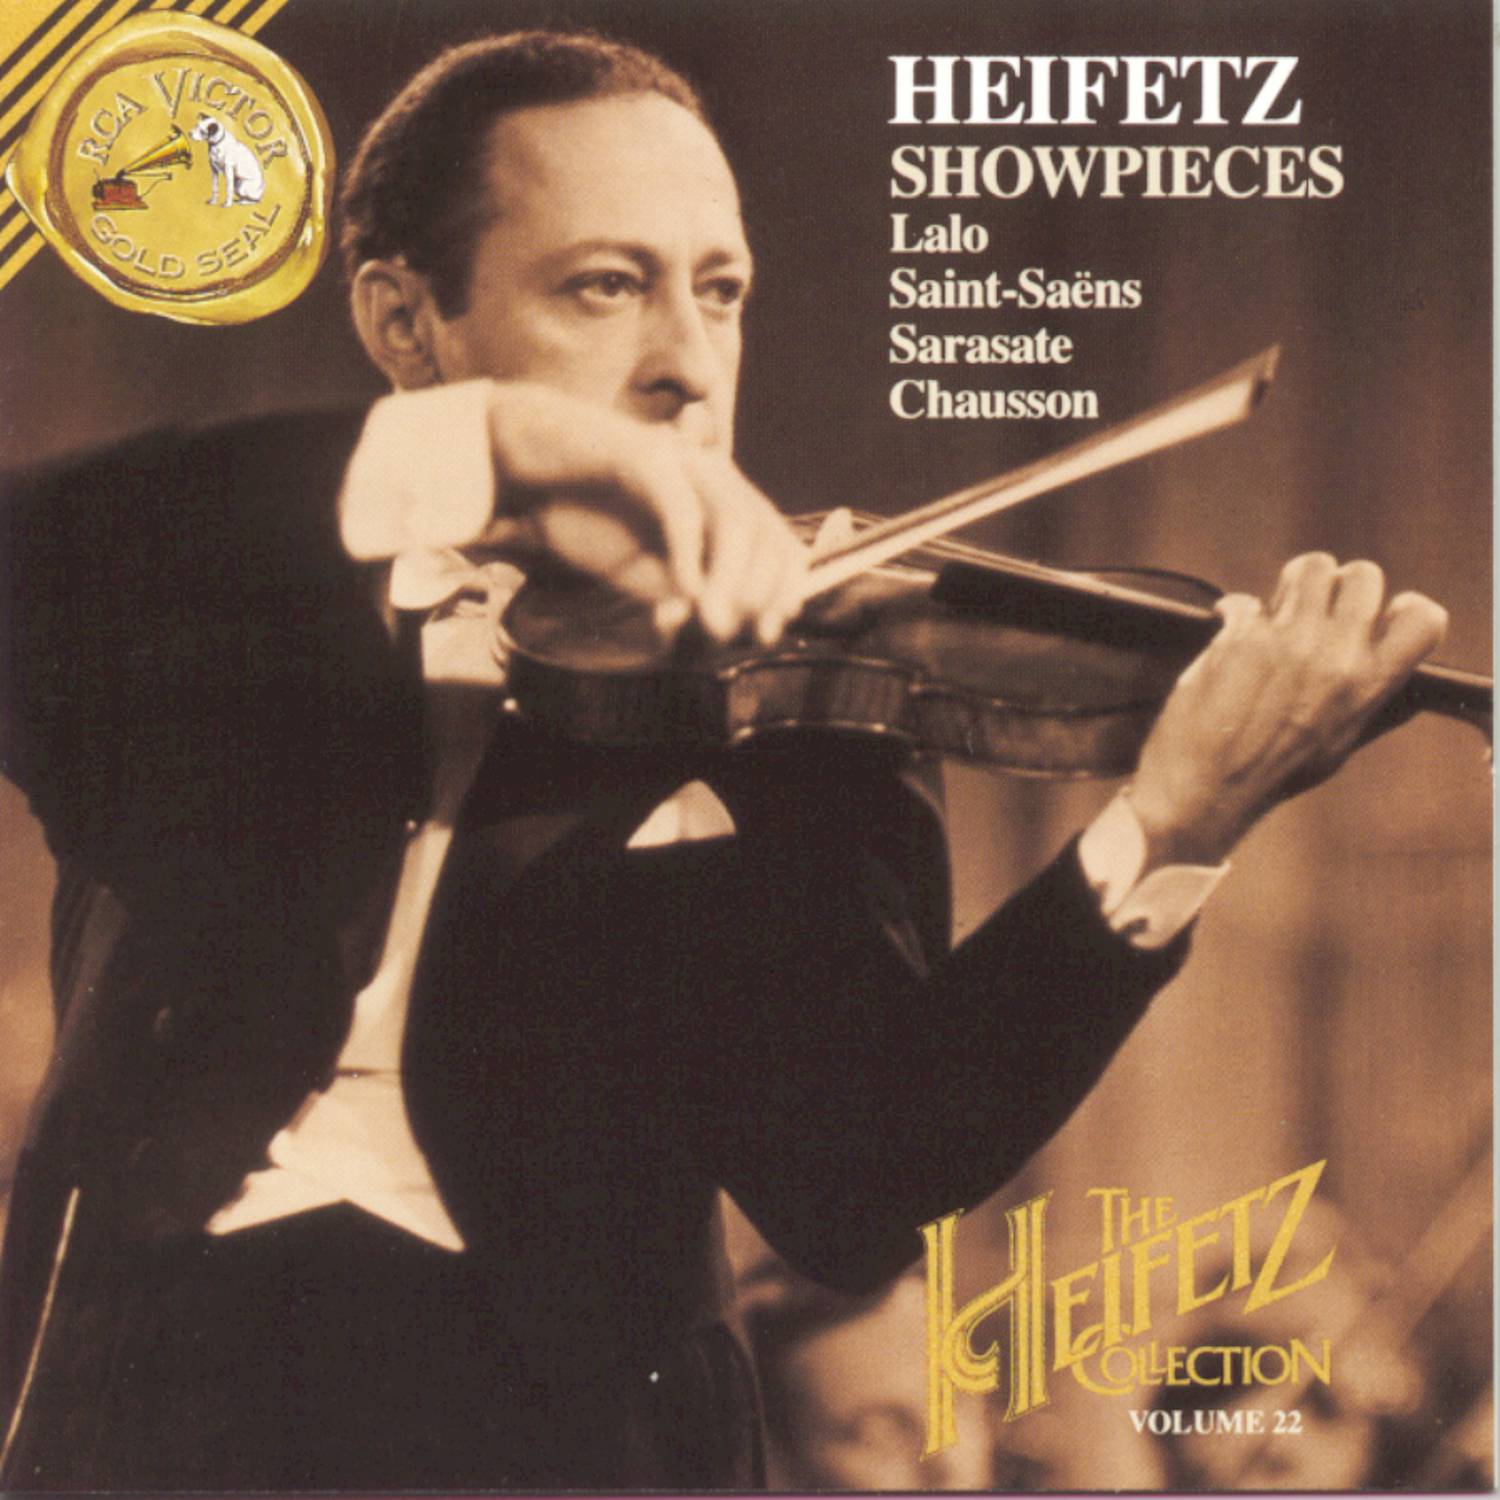 The Heifetz Collection Vol. 22 - Showpieces